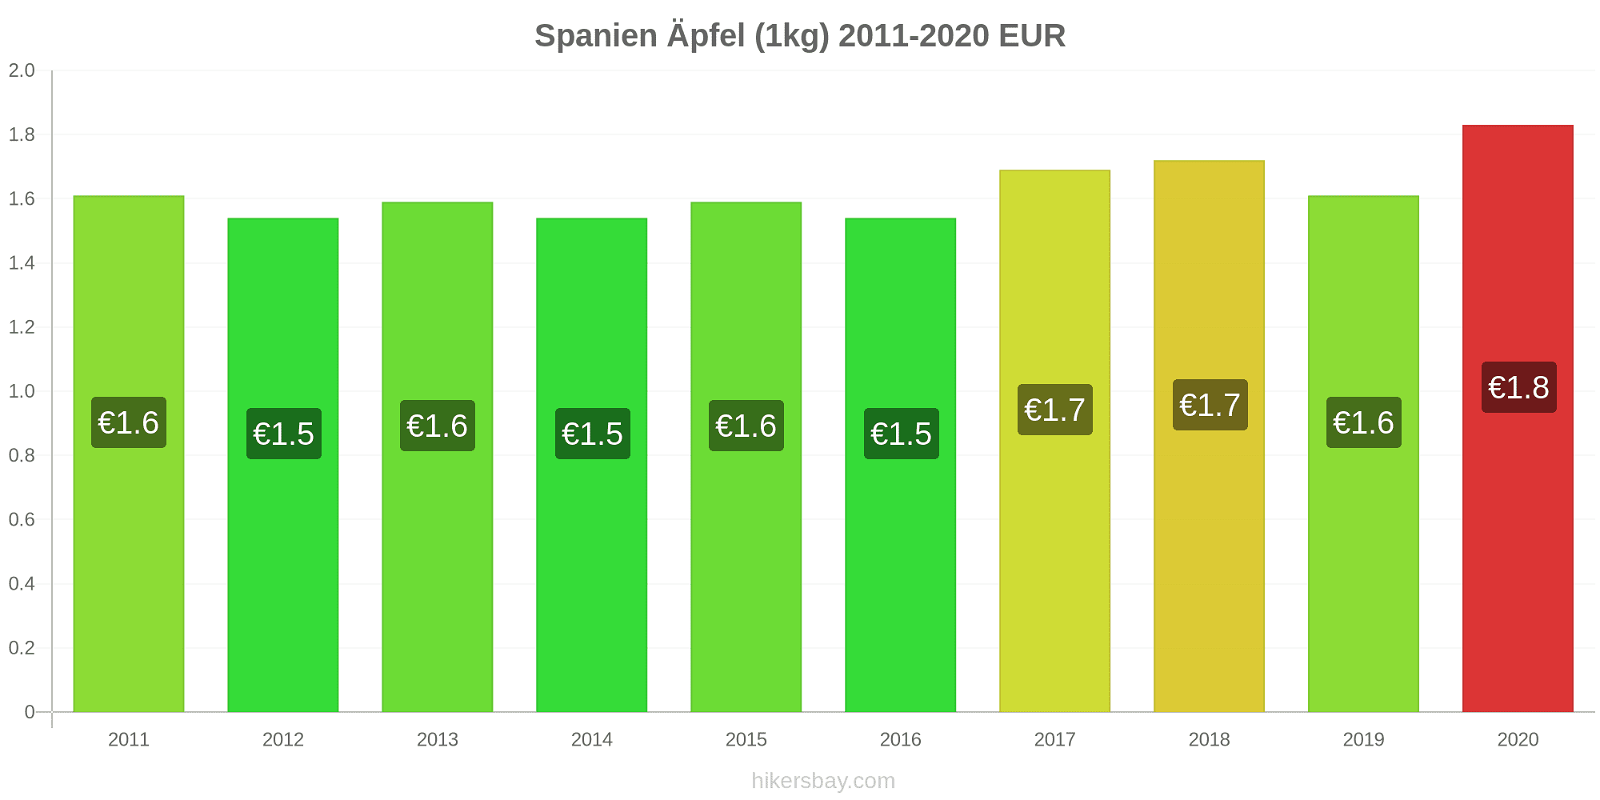 Spanien Preisänderungen Äpfel (1kg) hikersbay.com